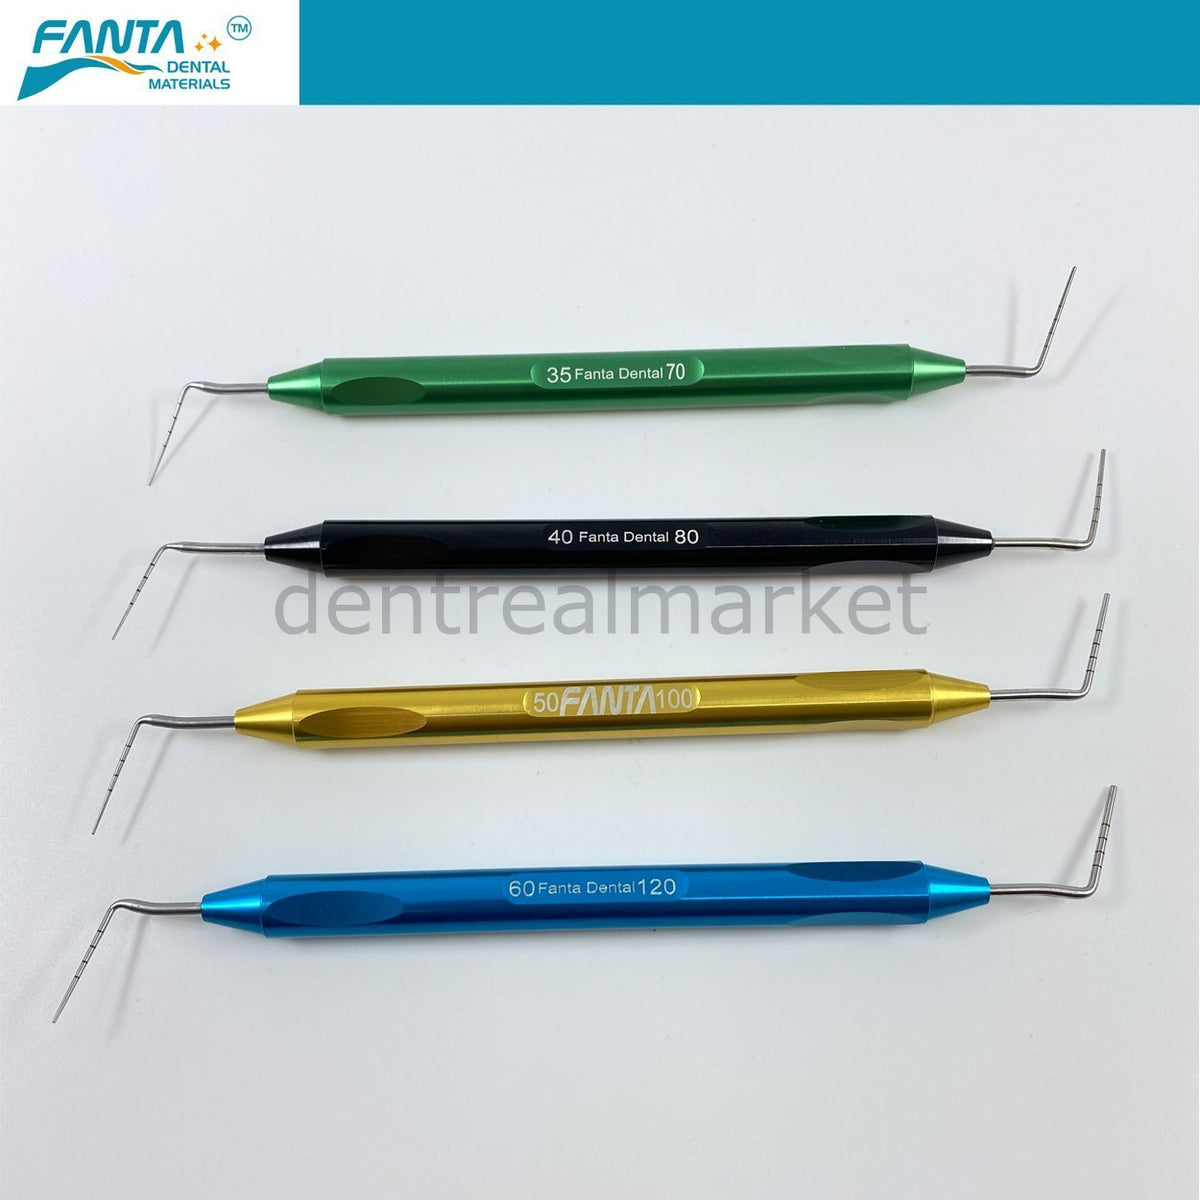 DentrealStore - Fanta Dental Gp Plugger Hand Tools Refill - Niti Rotary Root File